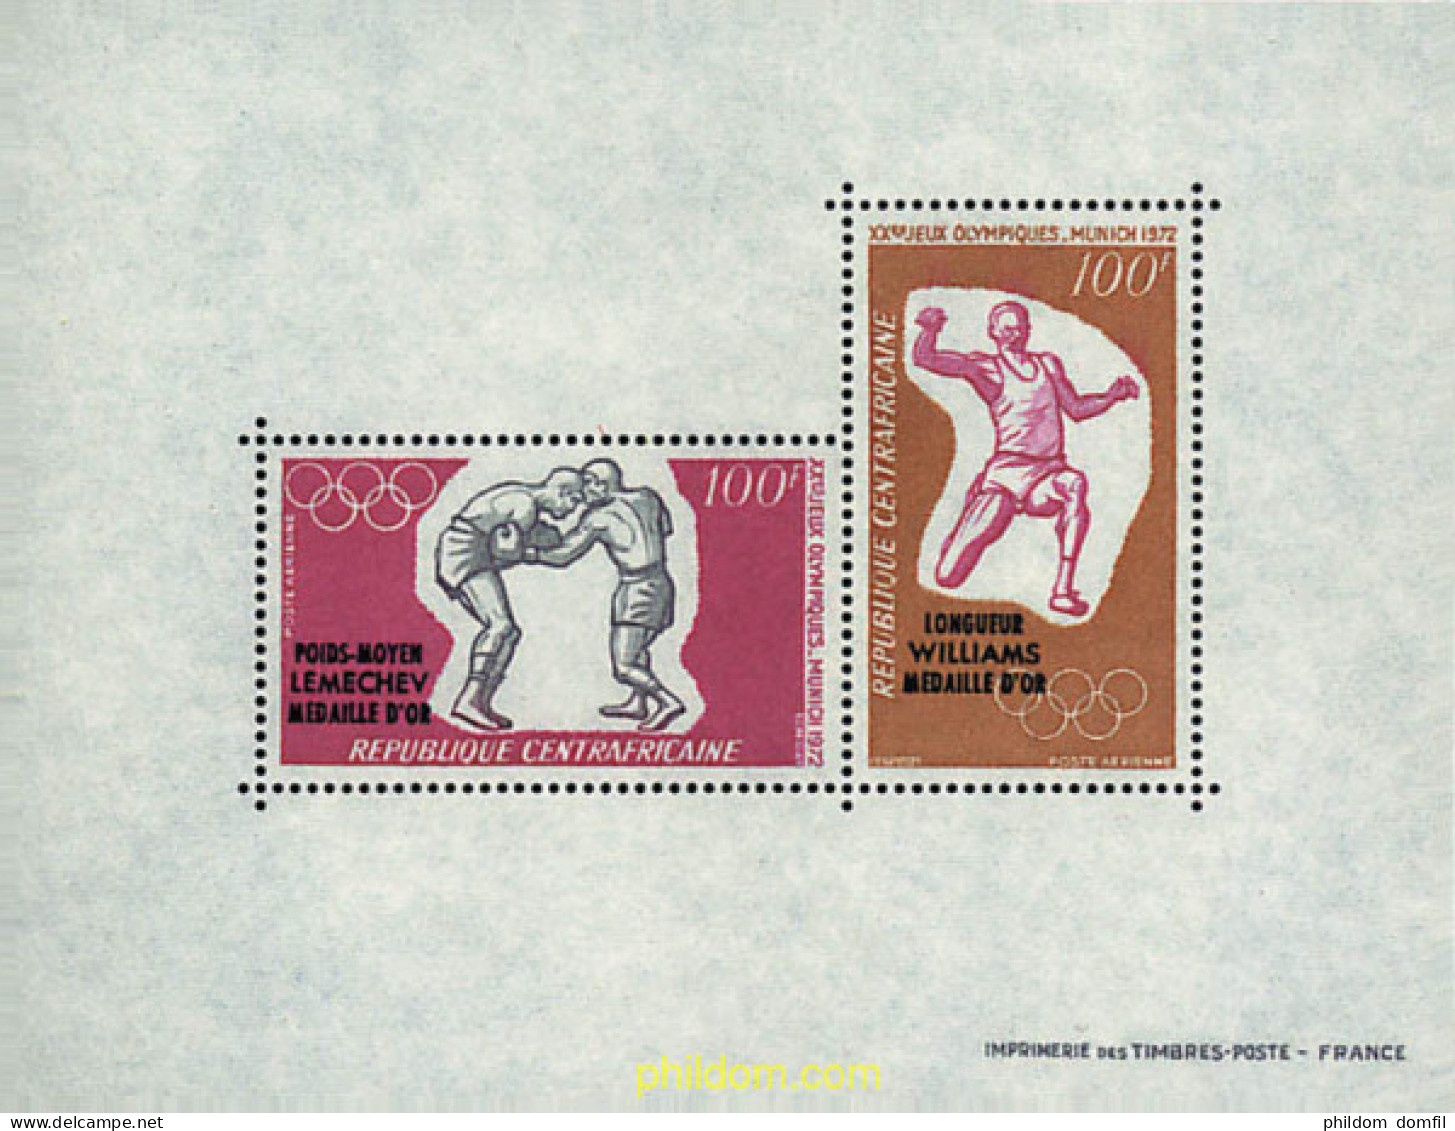 50778 MNH CENTROAFRICANA 1972 20 JUEGOS OLIMPICOS VERANO MUNICH 1972 - Centrafricaine (République)